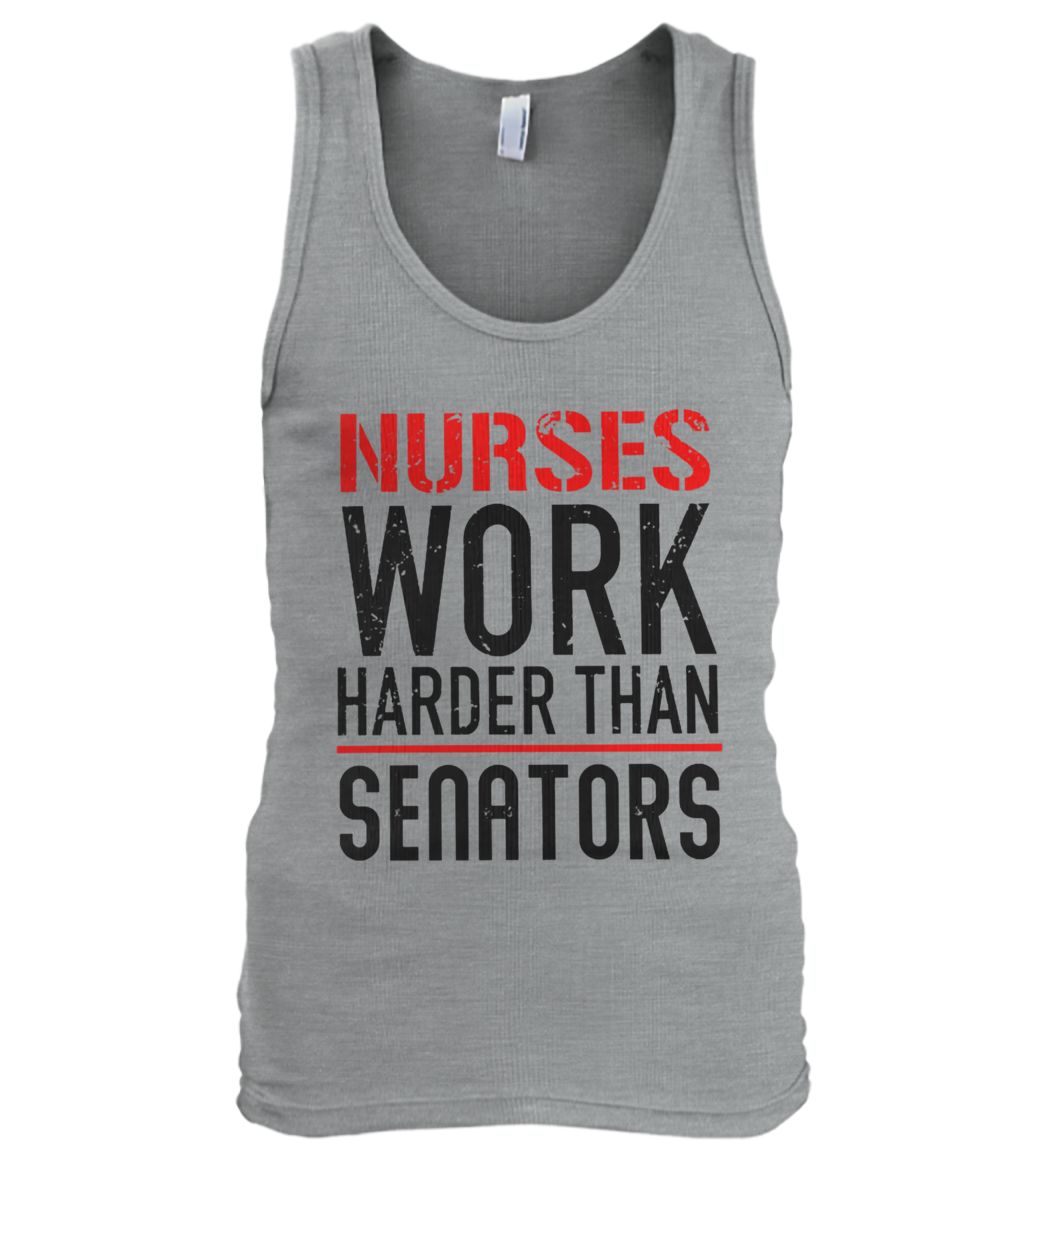 Nurses work harder than senators men's tank top